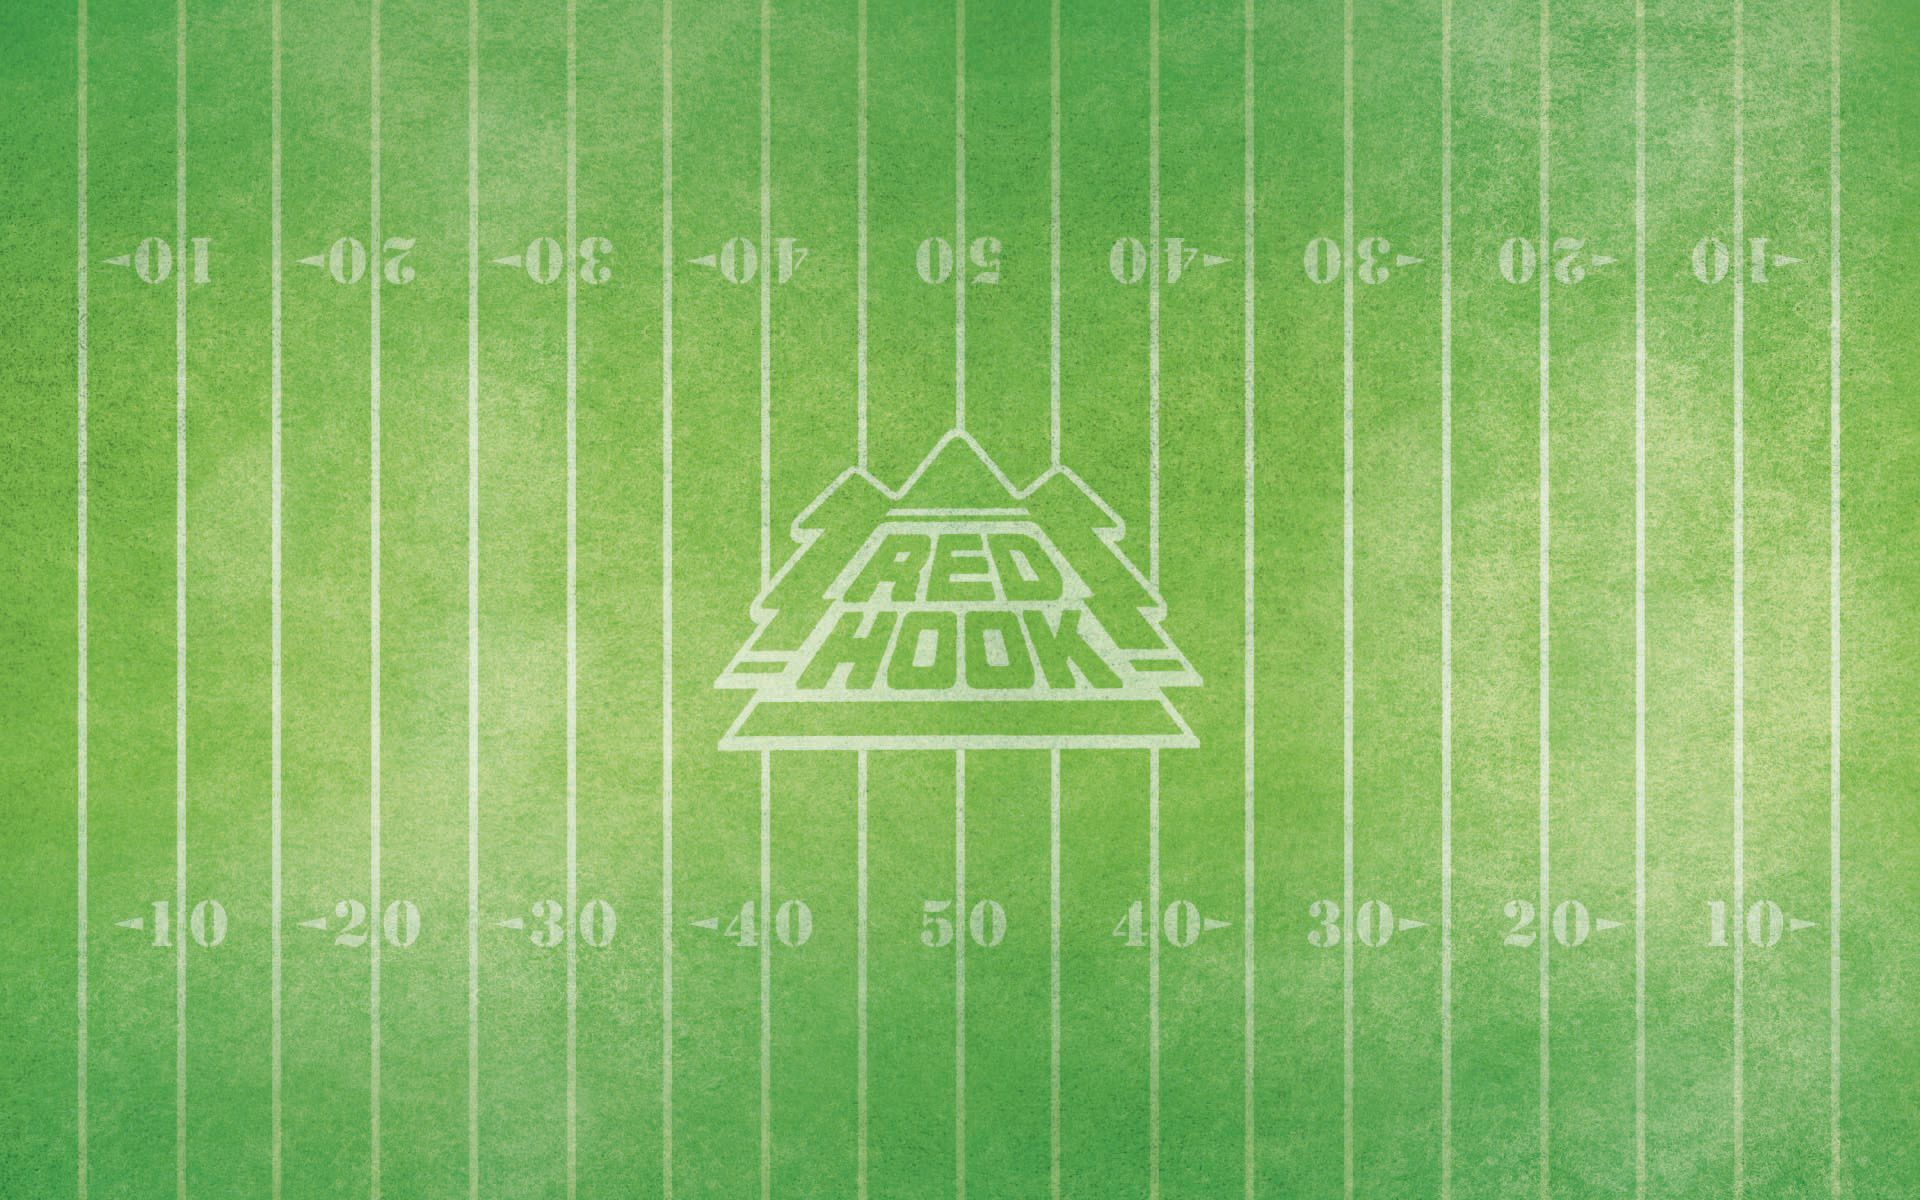 Football Field Background